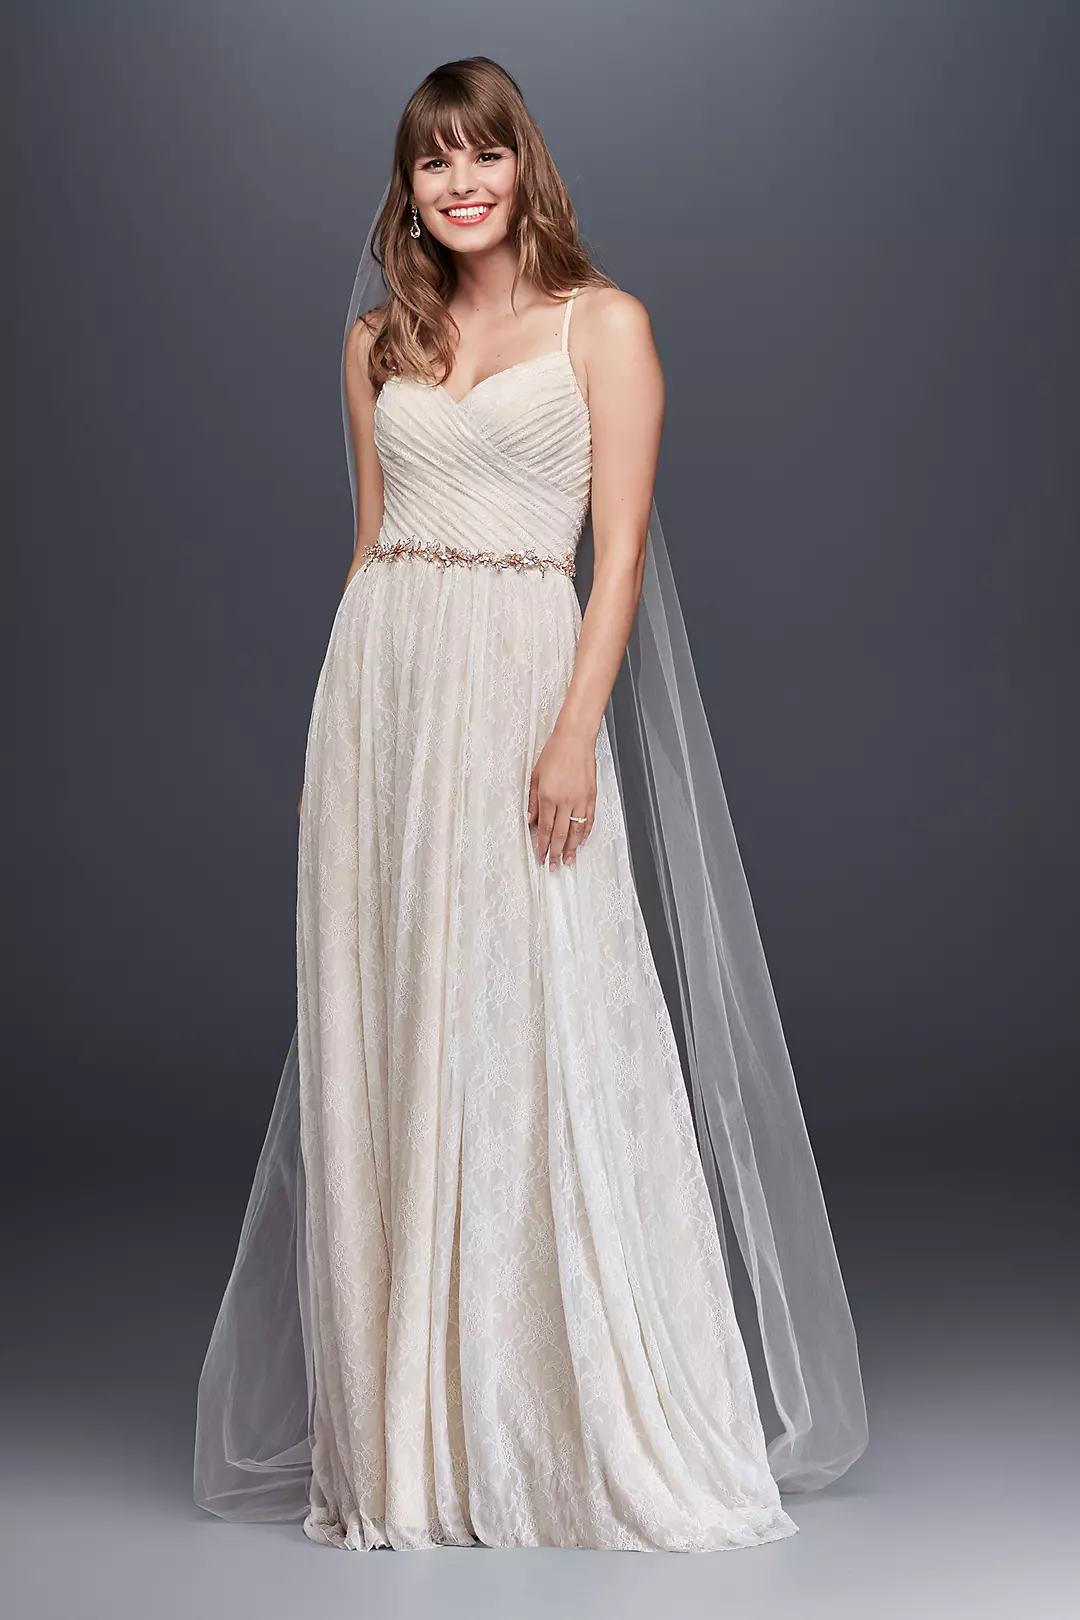 Soft Lace Wedding Dress with Pleated Bodice Image